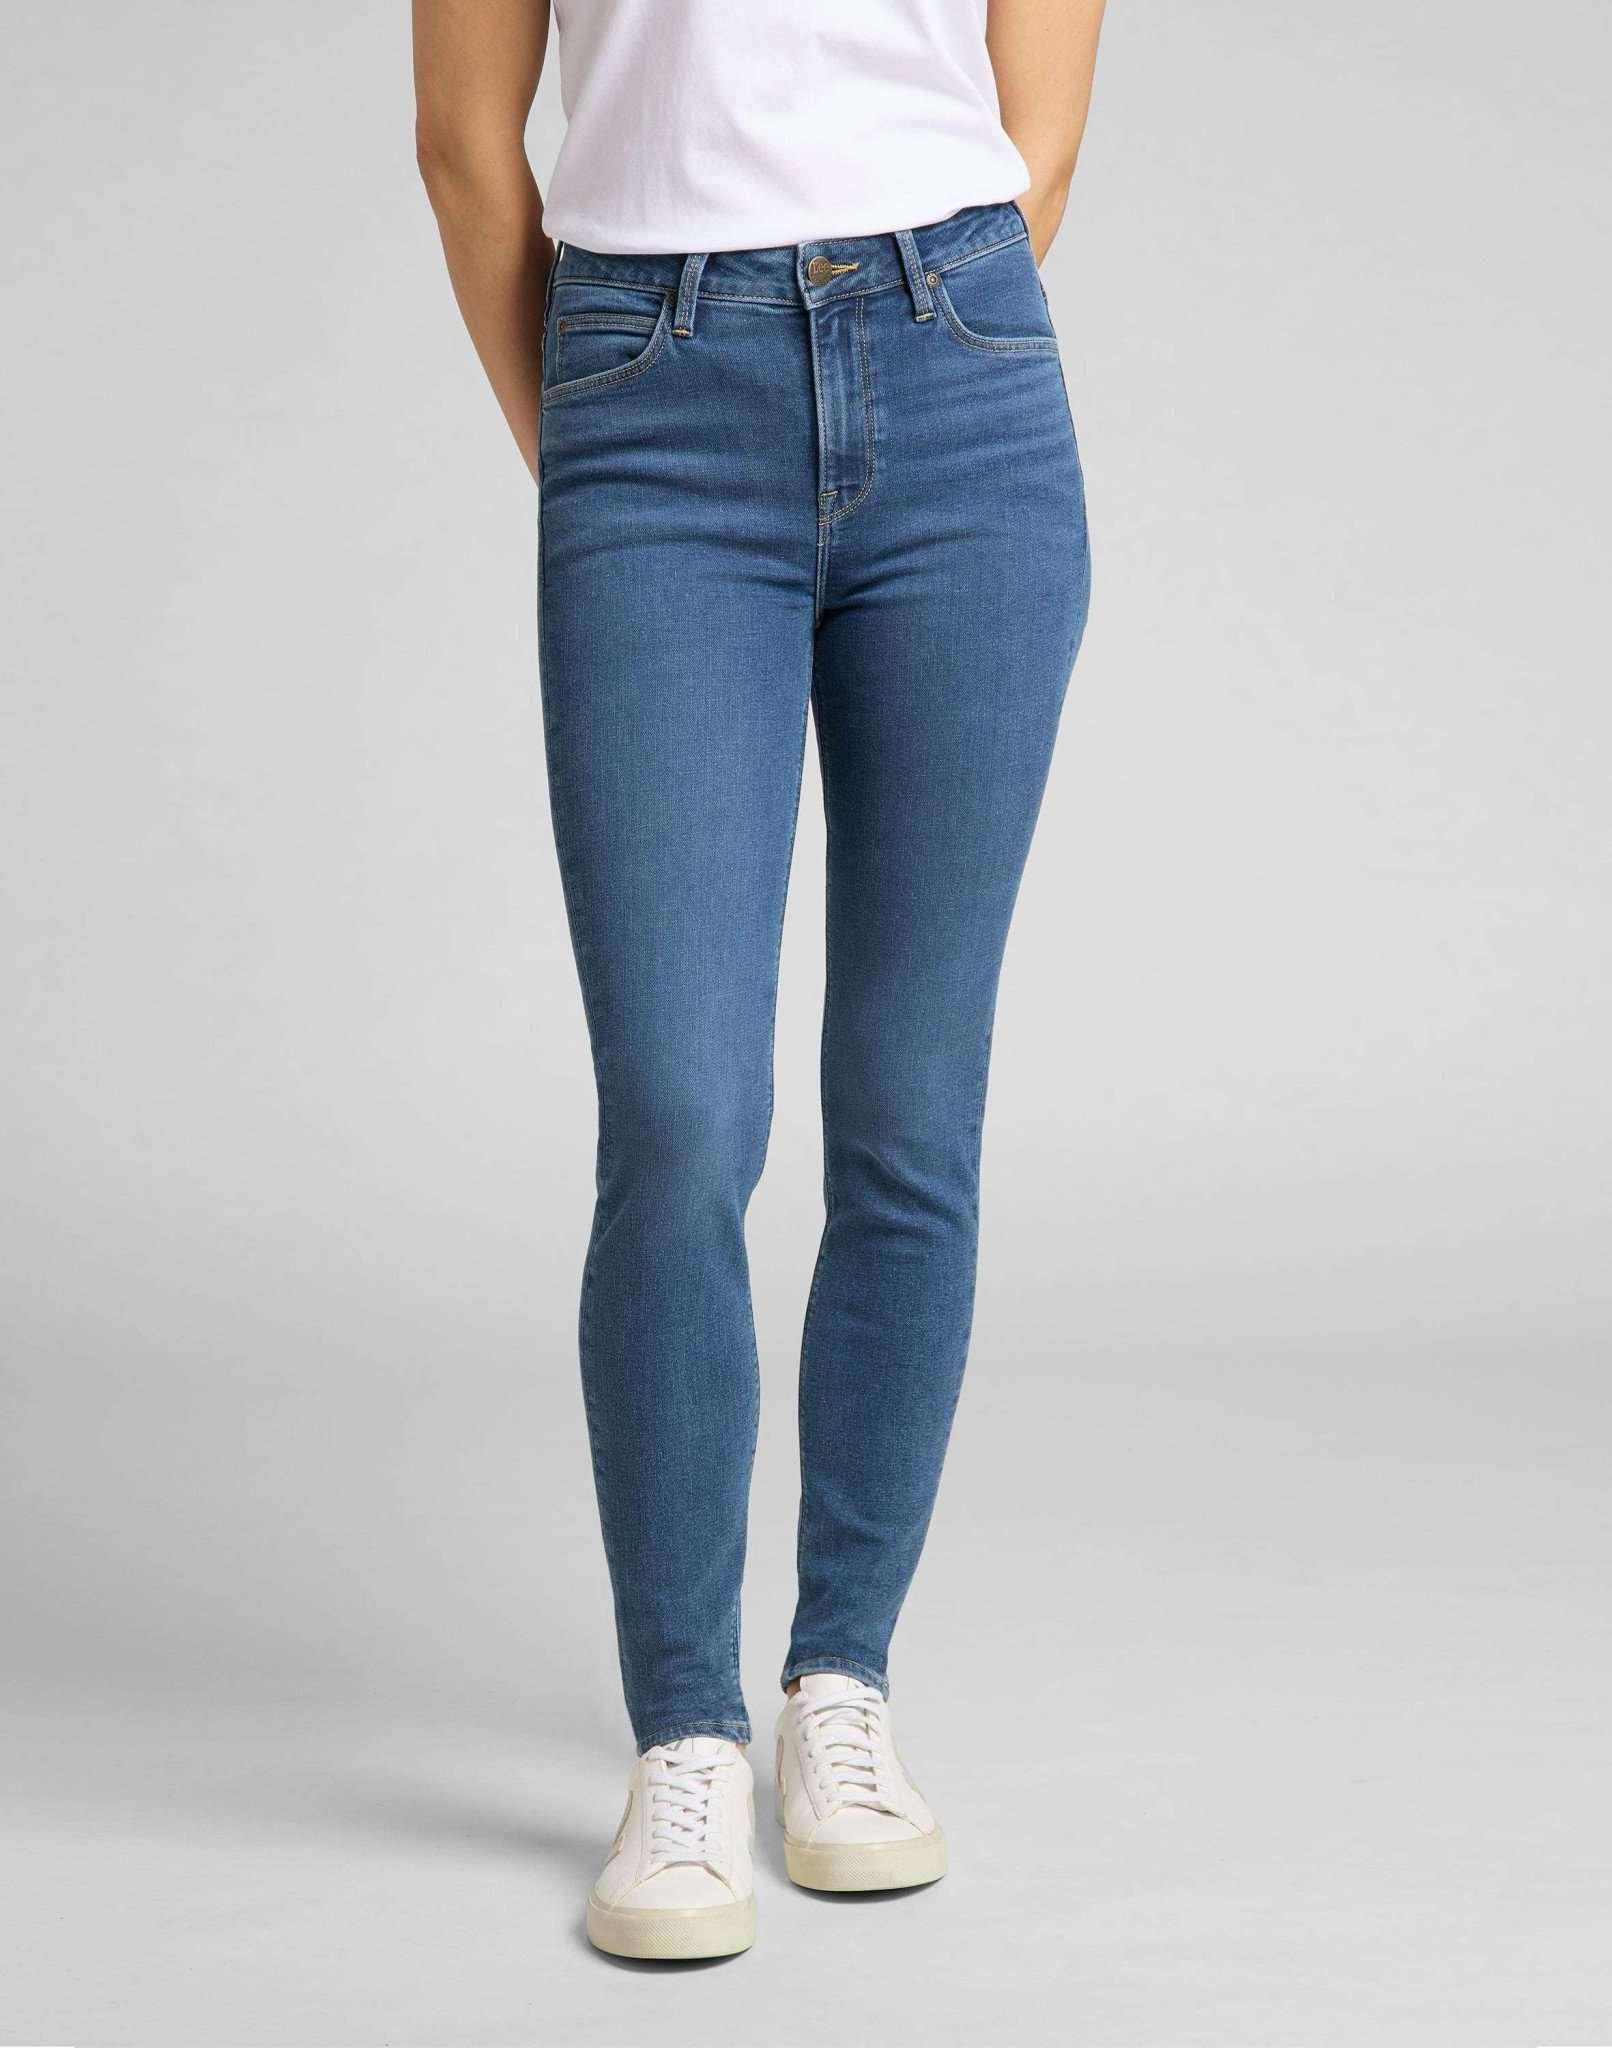 Jeans Skinny Fit Scarlett High Damen Blau Denim L31/W30 von Lee